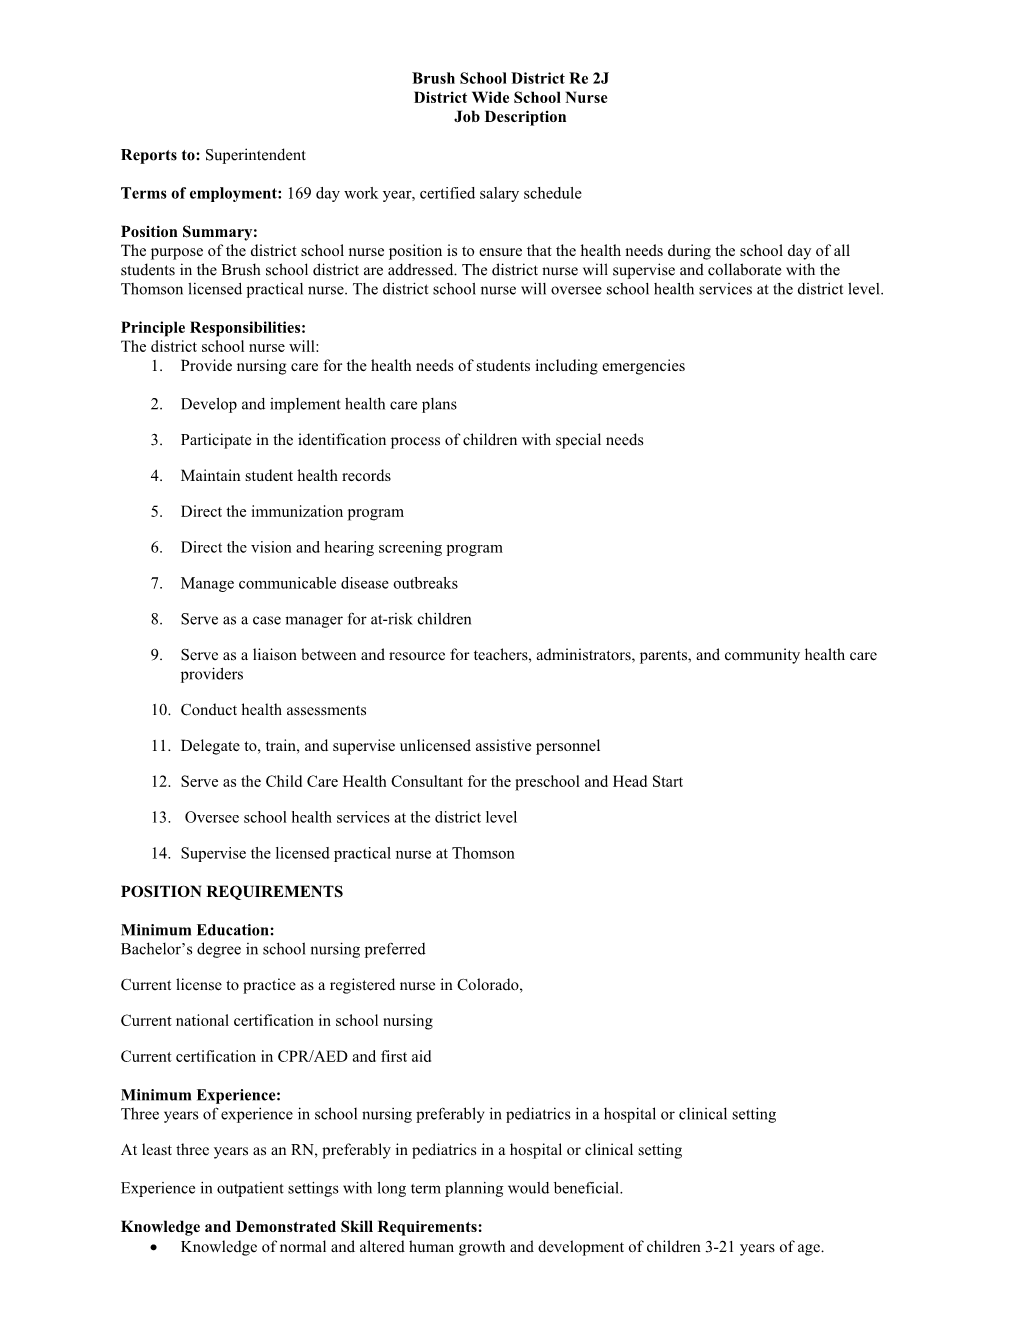 Brush School District Re 2J District Wide School Nurse Job Description Reports To: Superintendent Terms of Employment: 169 Day W